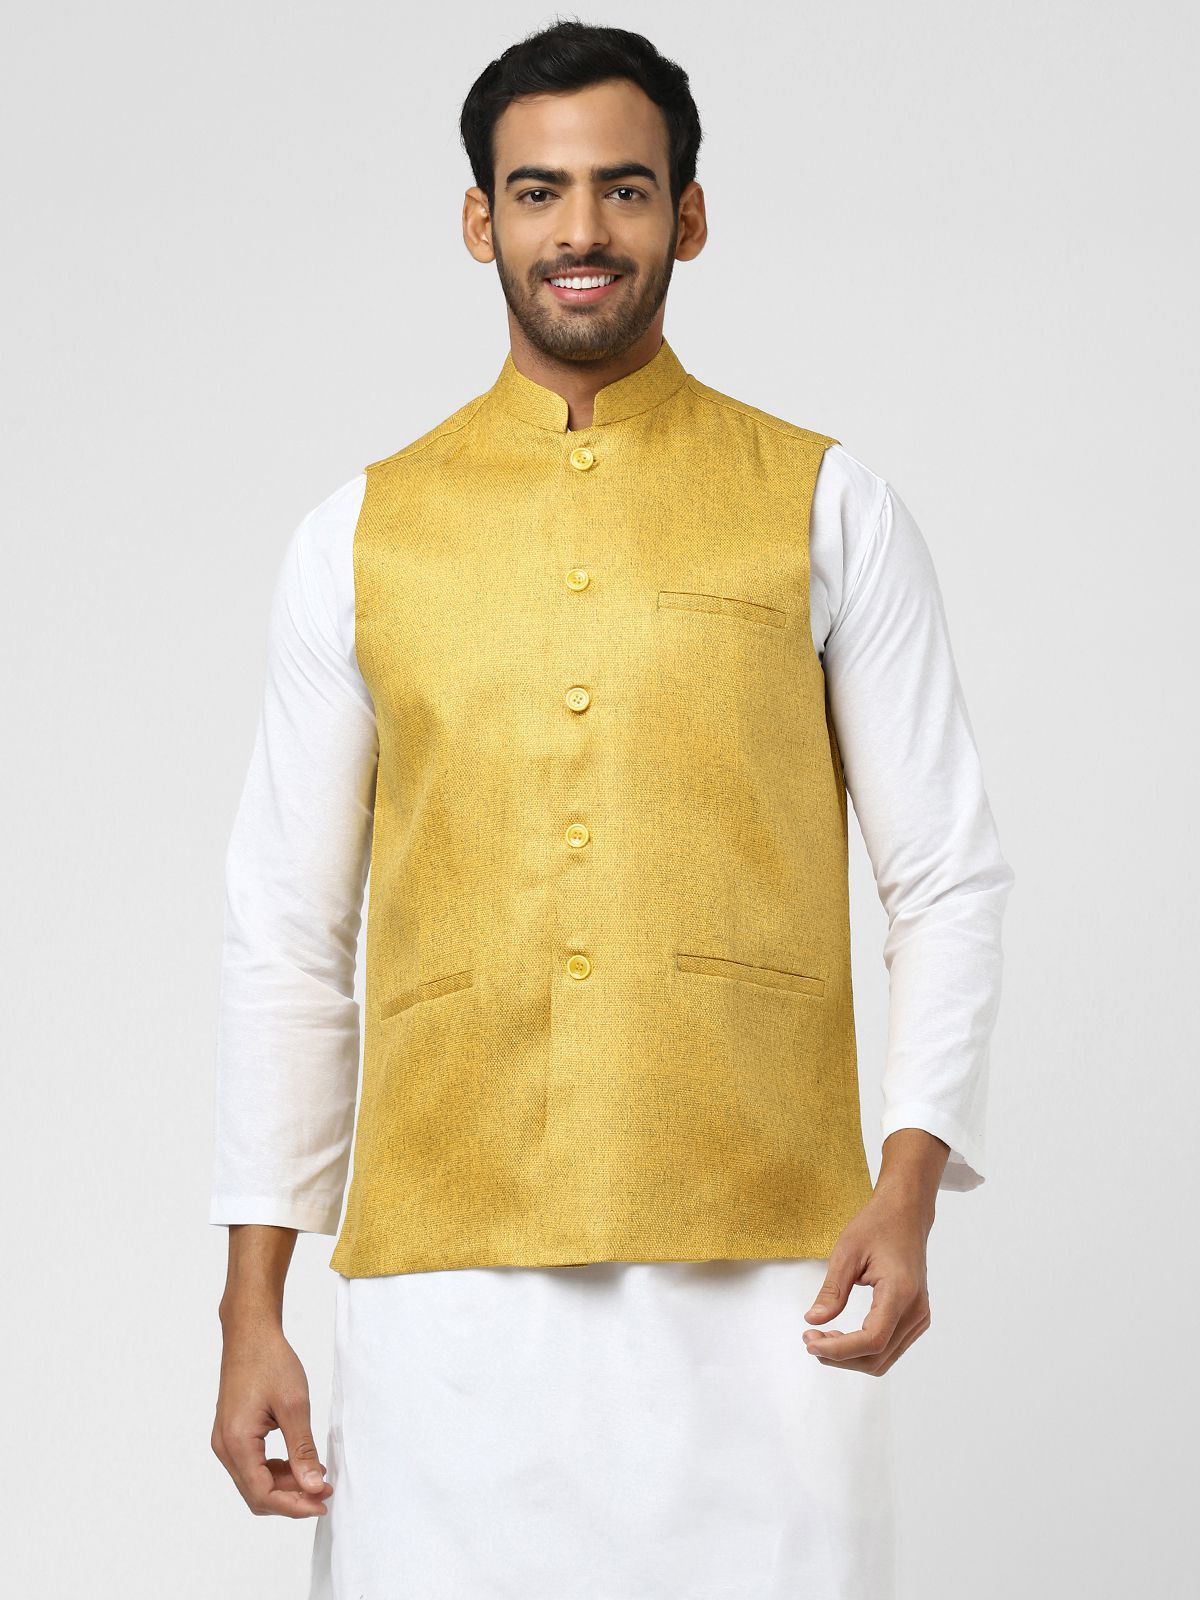     			DESHBANDHU DBK Yellow Jute Nehru Jacket Single Pack